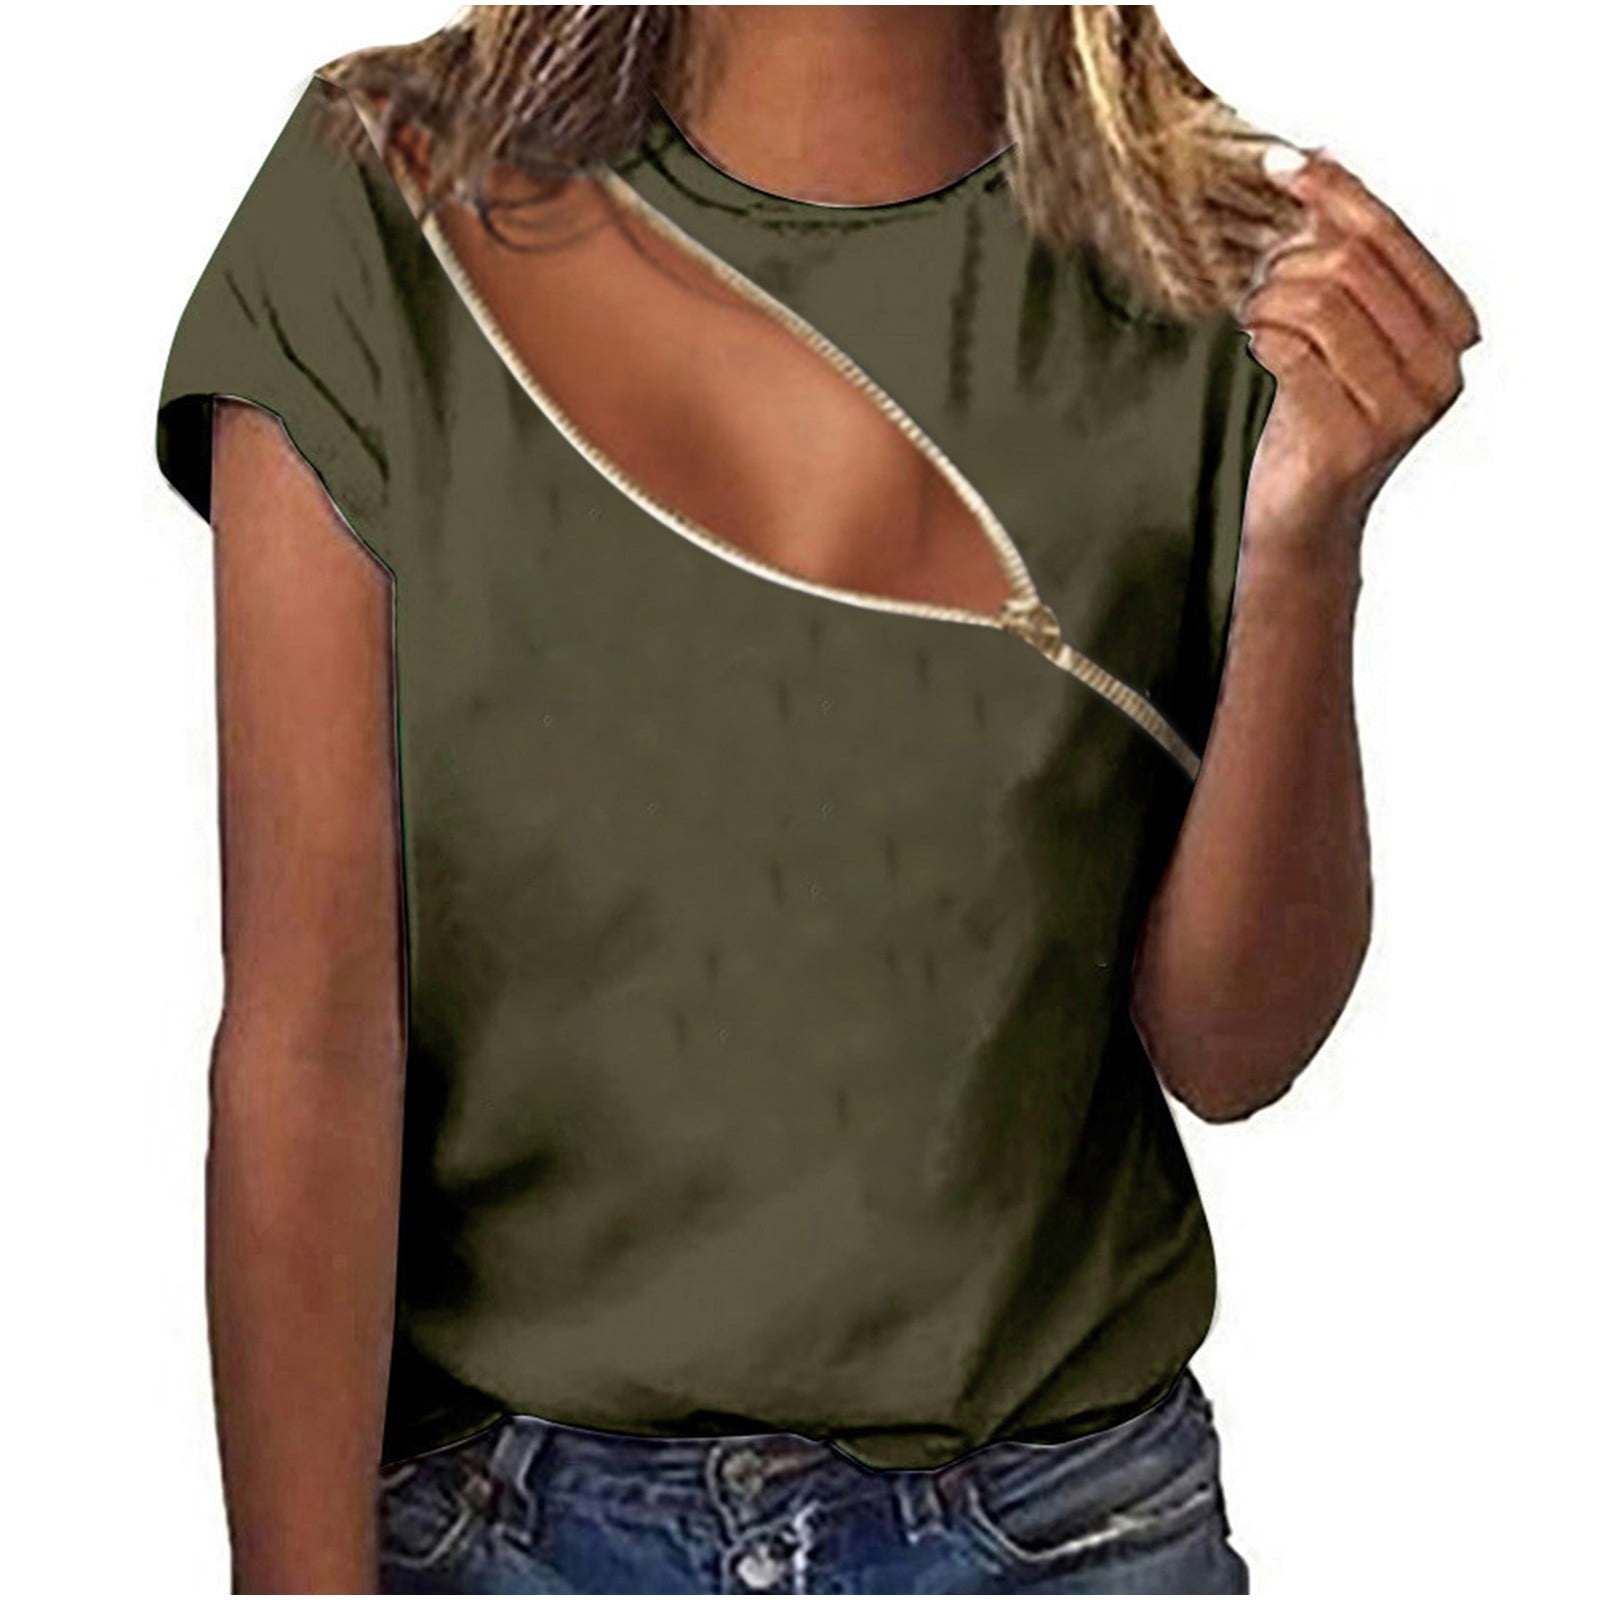 Women Clothing Stretch Top Blouse Casual Crop Jacket Size M L XL 1X 2X 3X 